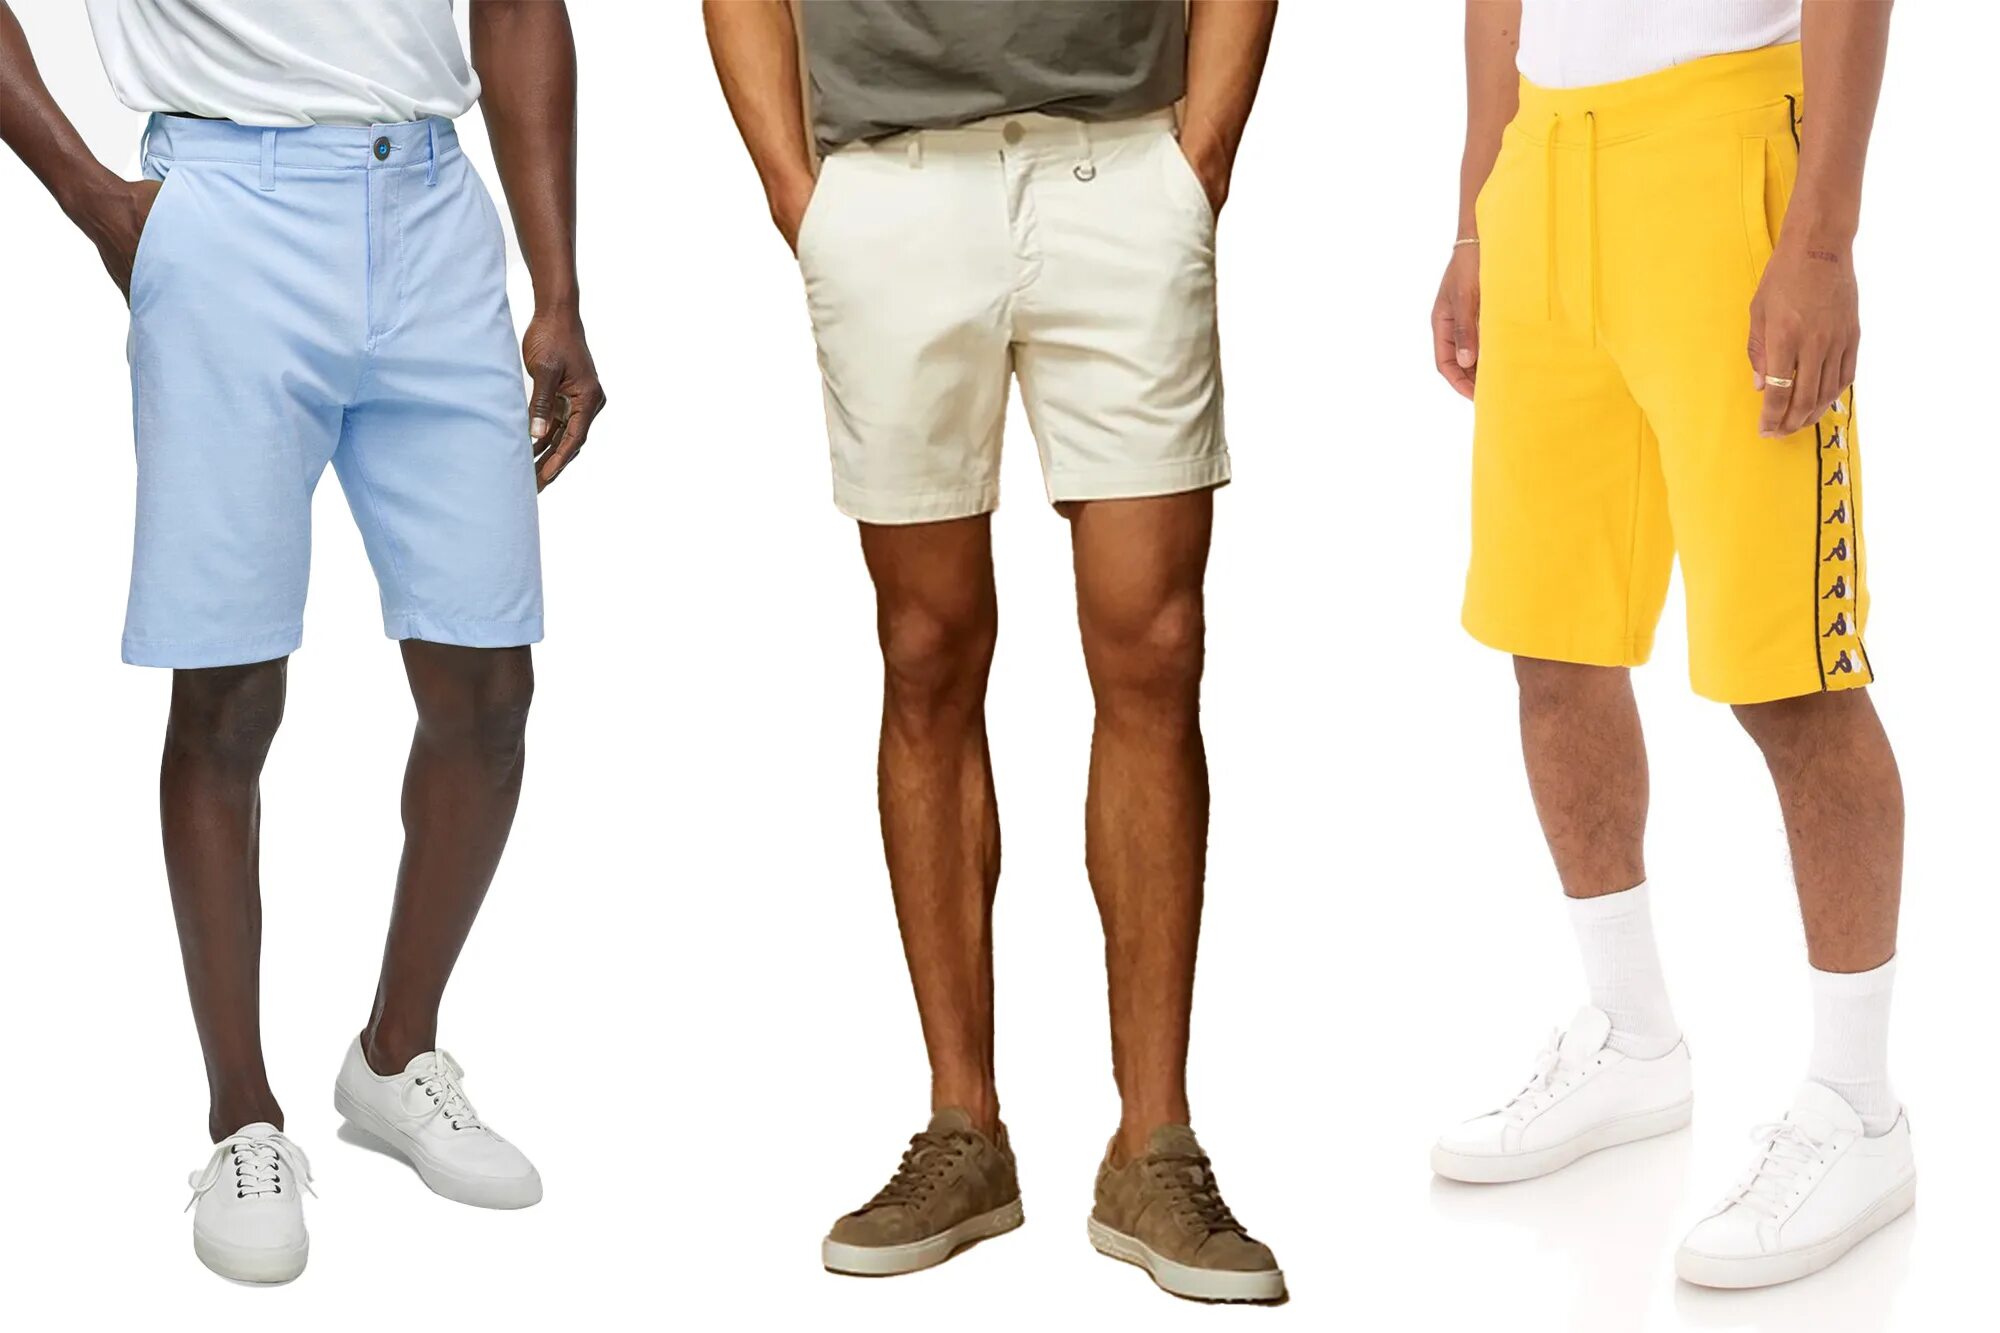 Шорты Balenciaga. Канал good shorts. Mens shorts. In extenso шорты мужские. Italian best shorts 7